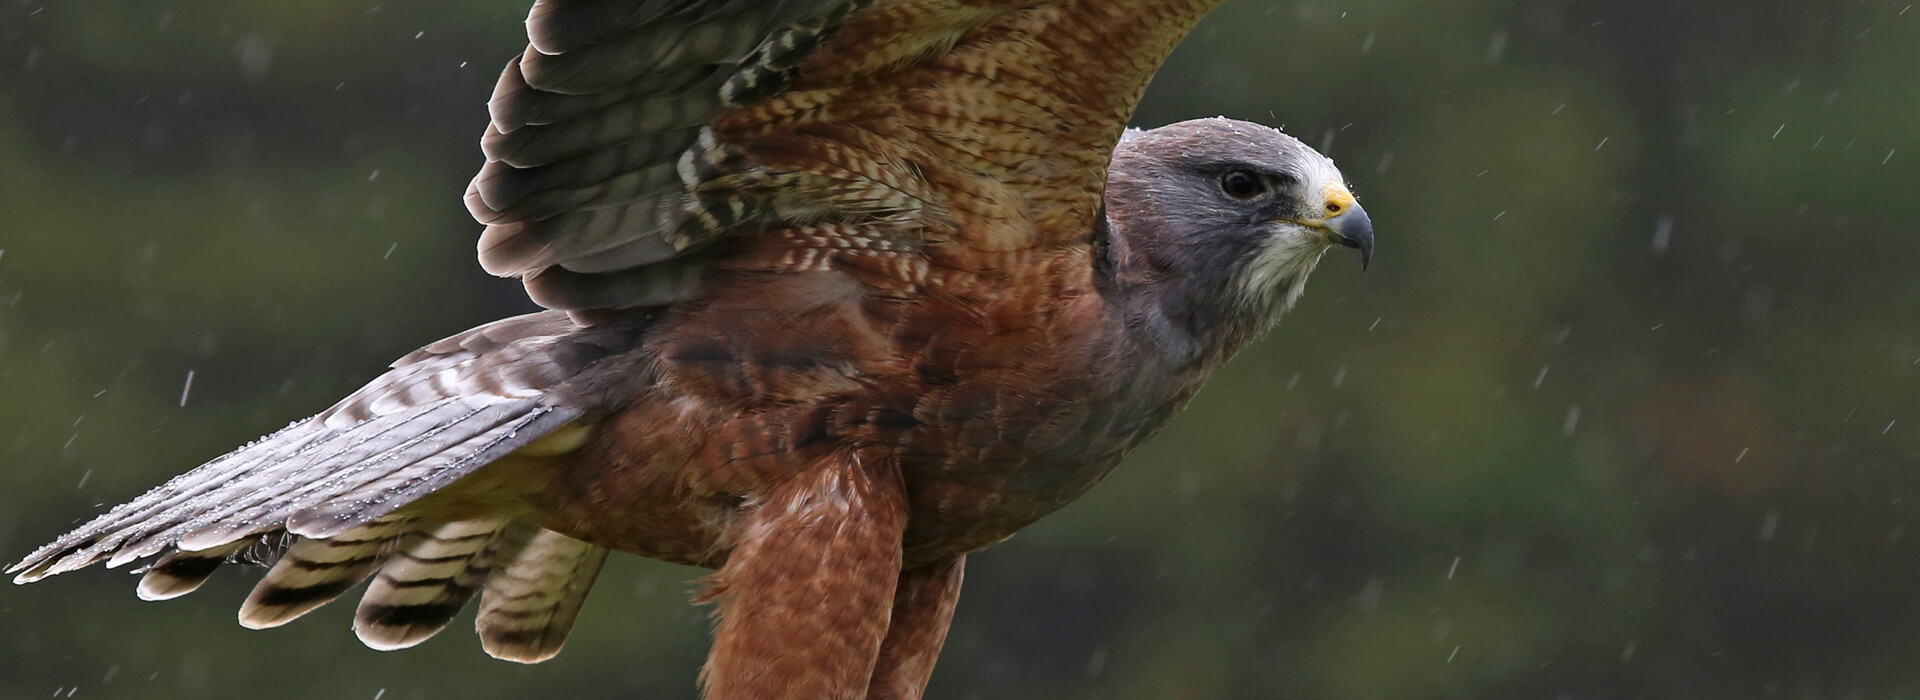 Swainson's Hawk, Chris Hill/Shutterstock